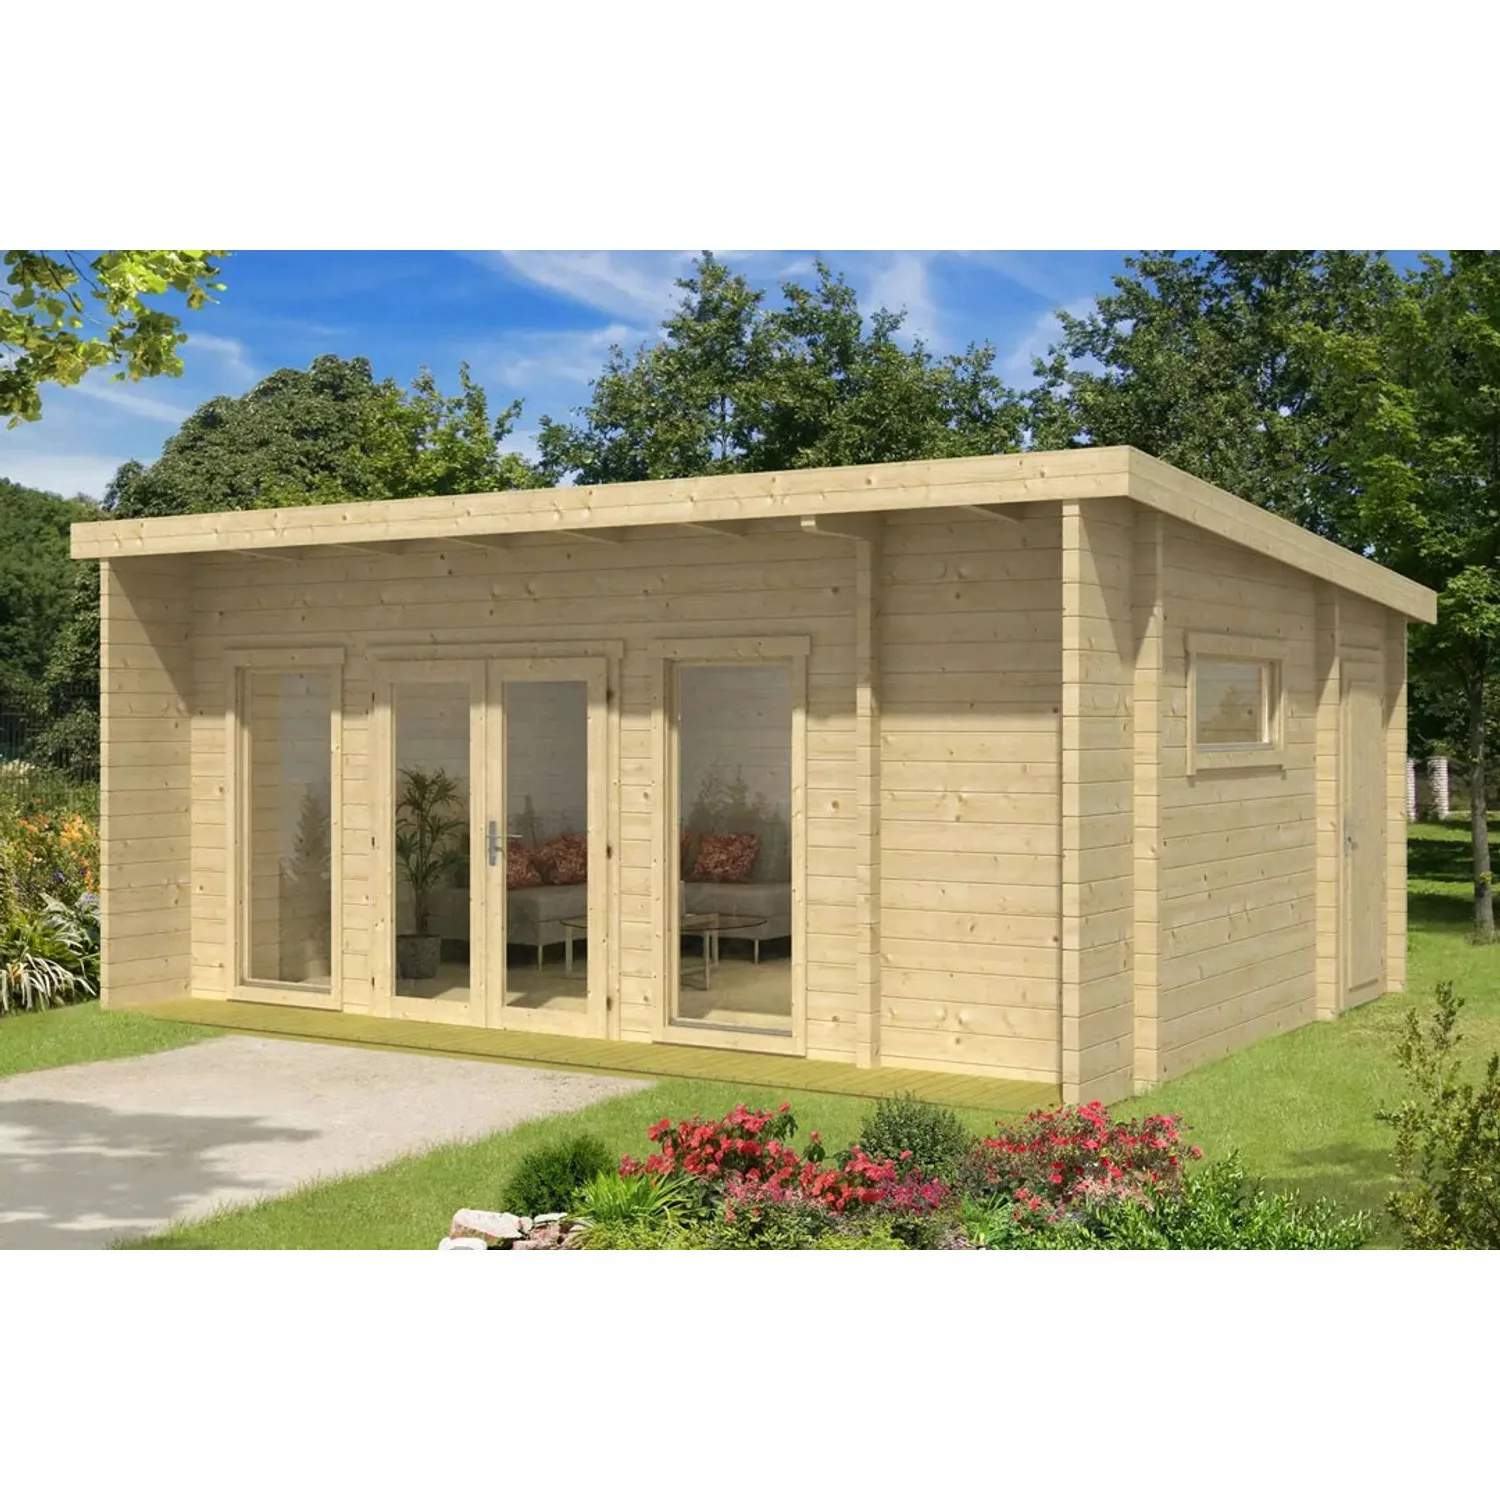 Alpholz Holz-Gartenhaus Carla-70 Pultdach Tauchimprägniert 920 cm x 492 cm günstig online kaufen